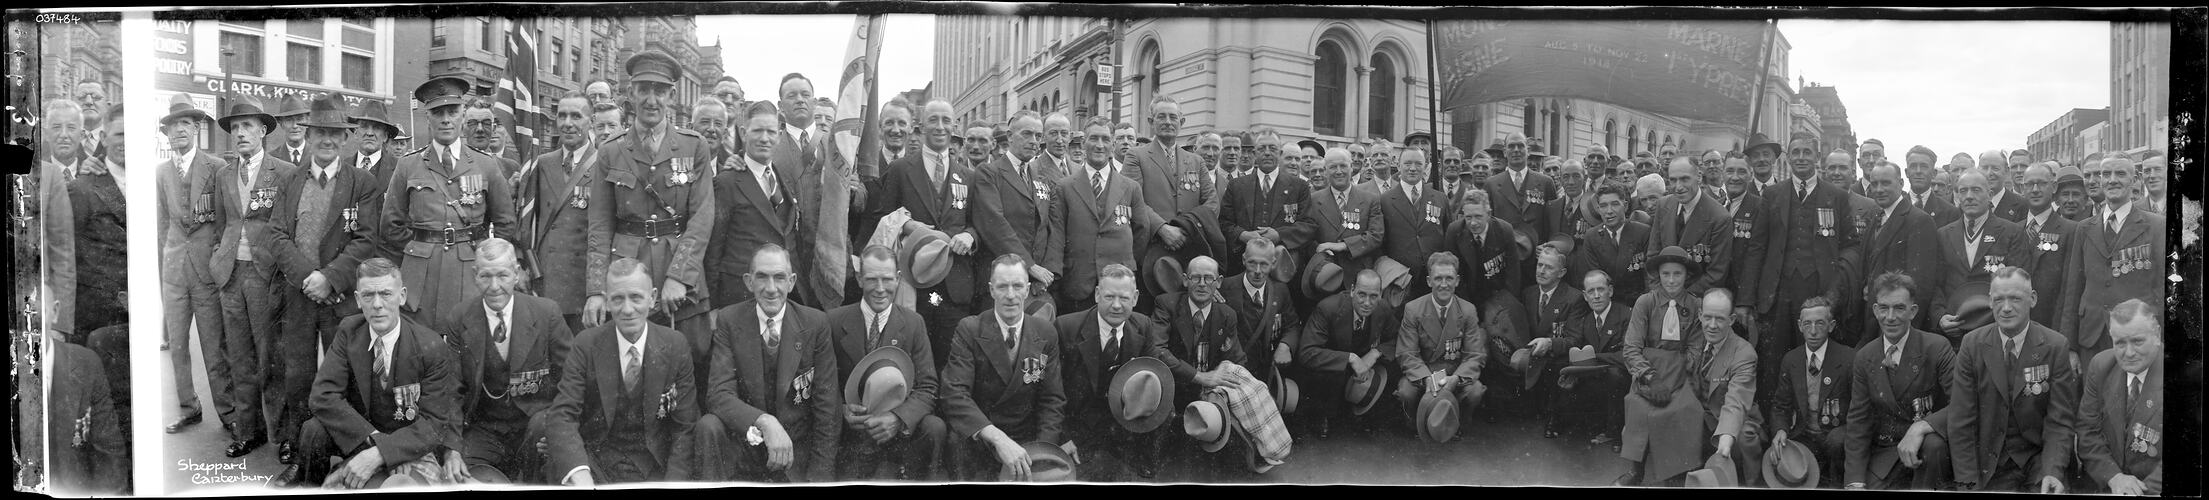 Anzac Day, Melbourne, post 1918